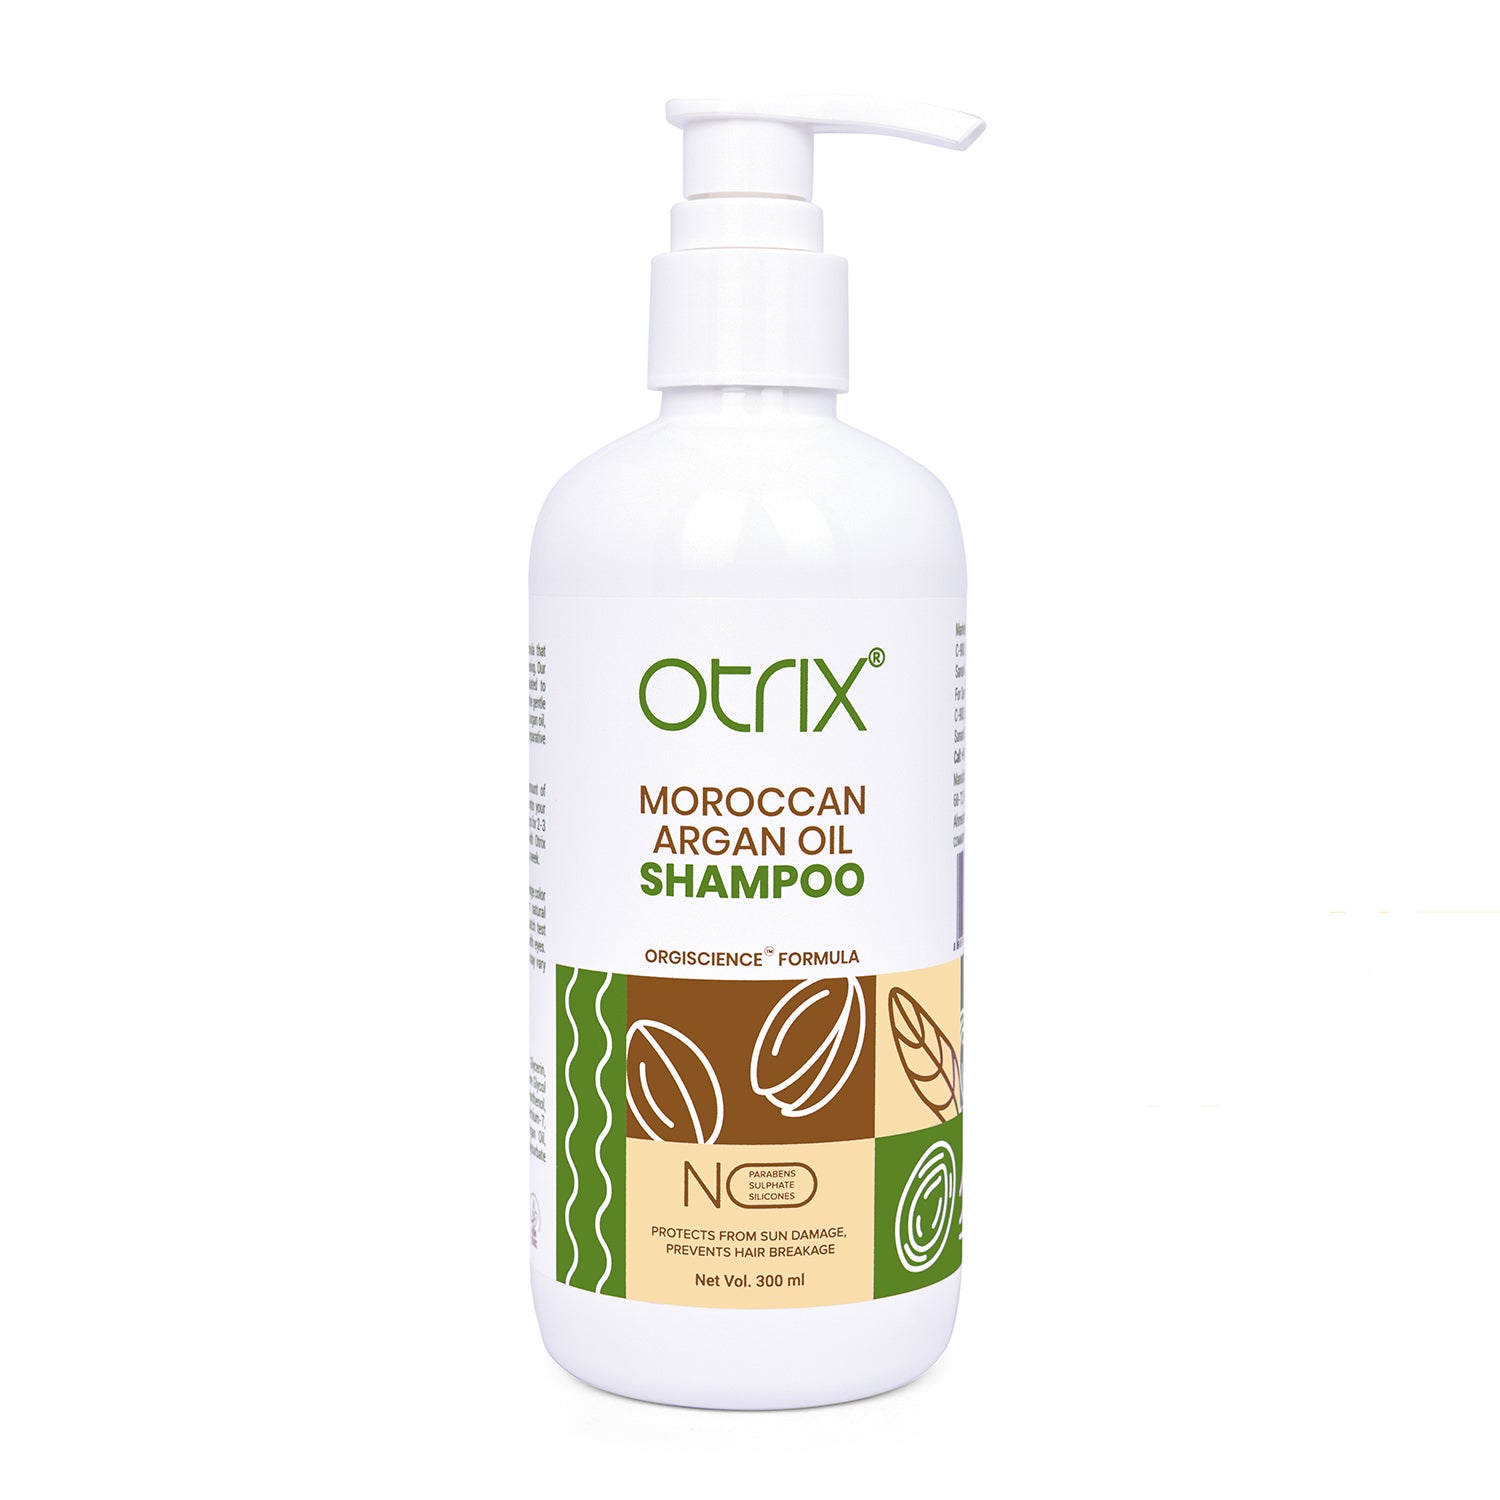 Moroccan Argan Oil Shampoo - 300 ml